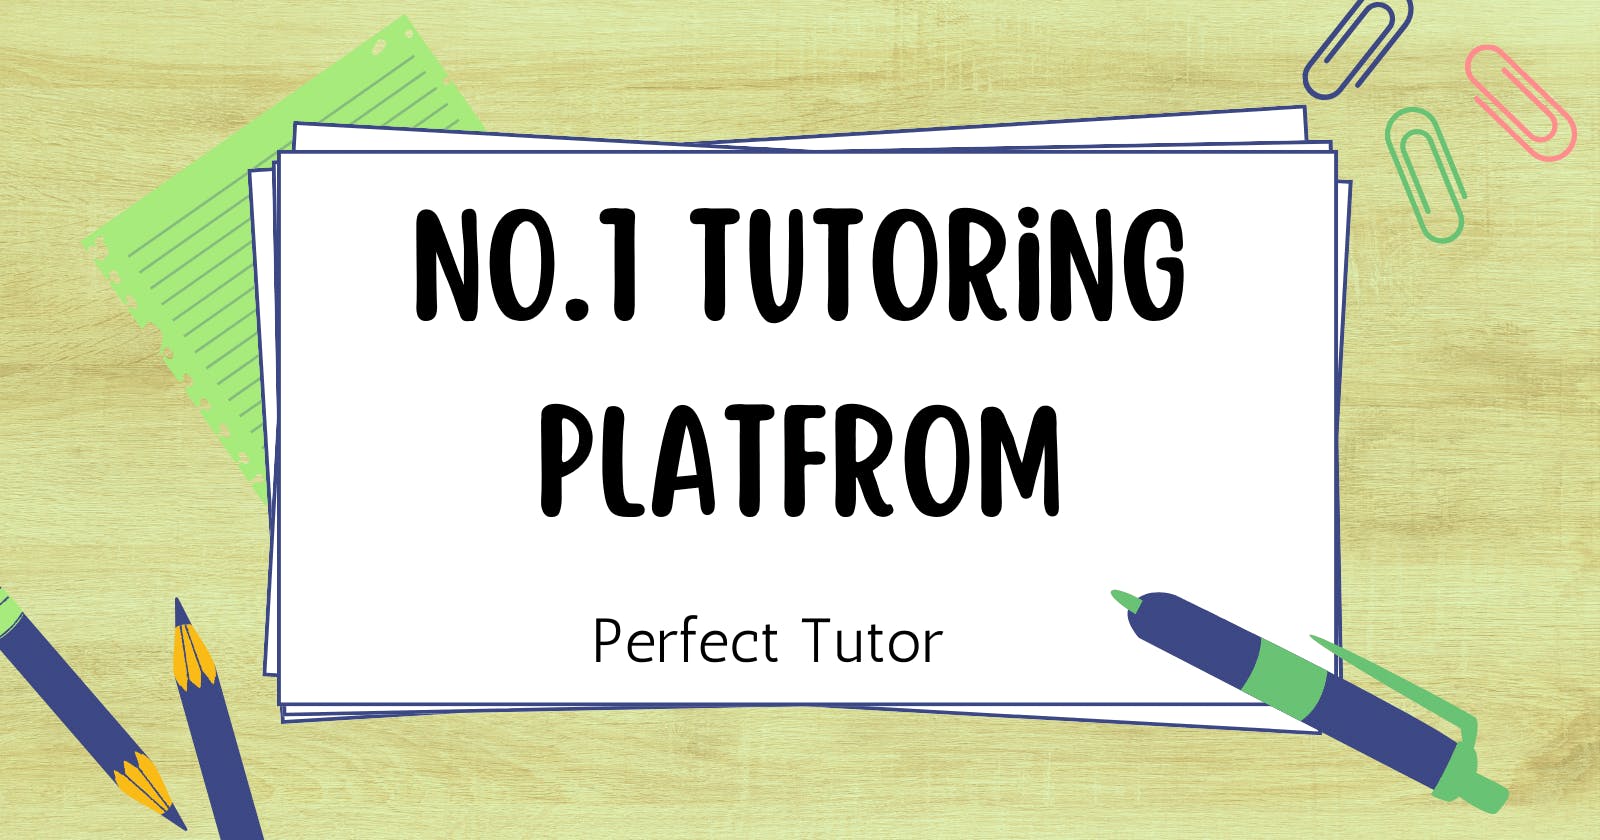 No.1 tutoring platform in Gurgaon | Home & Online Tutoring Site